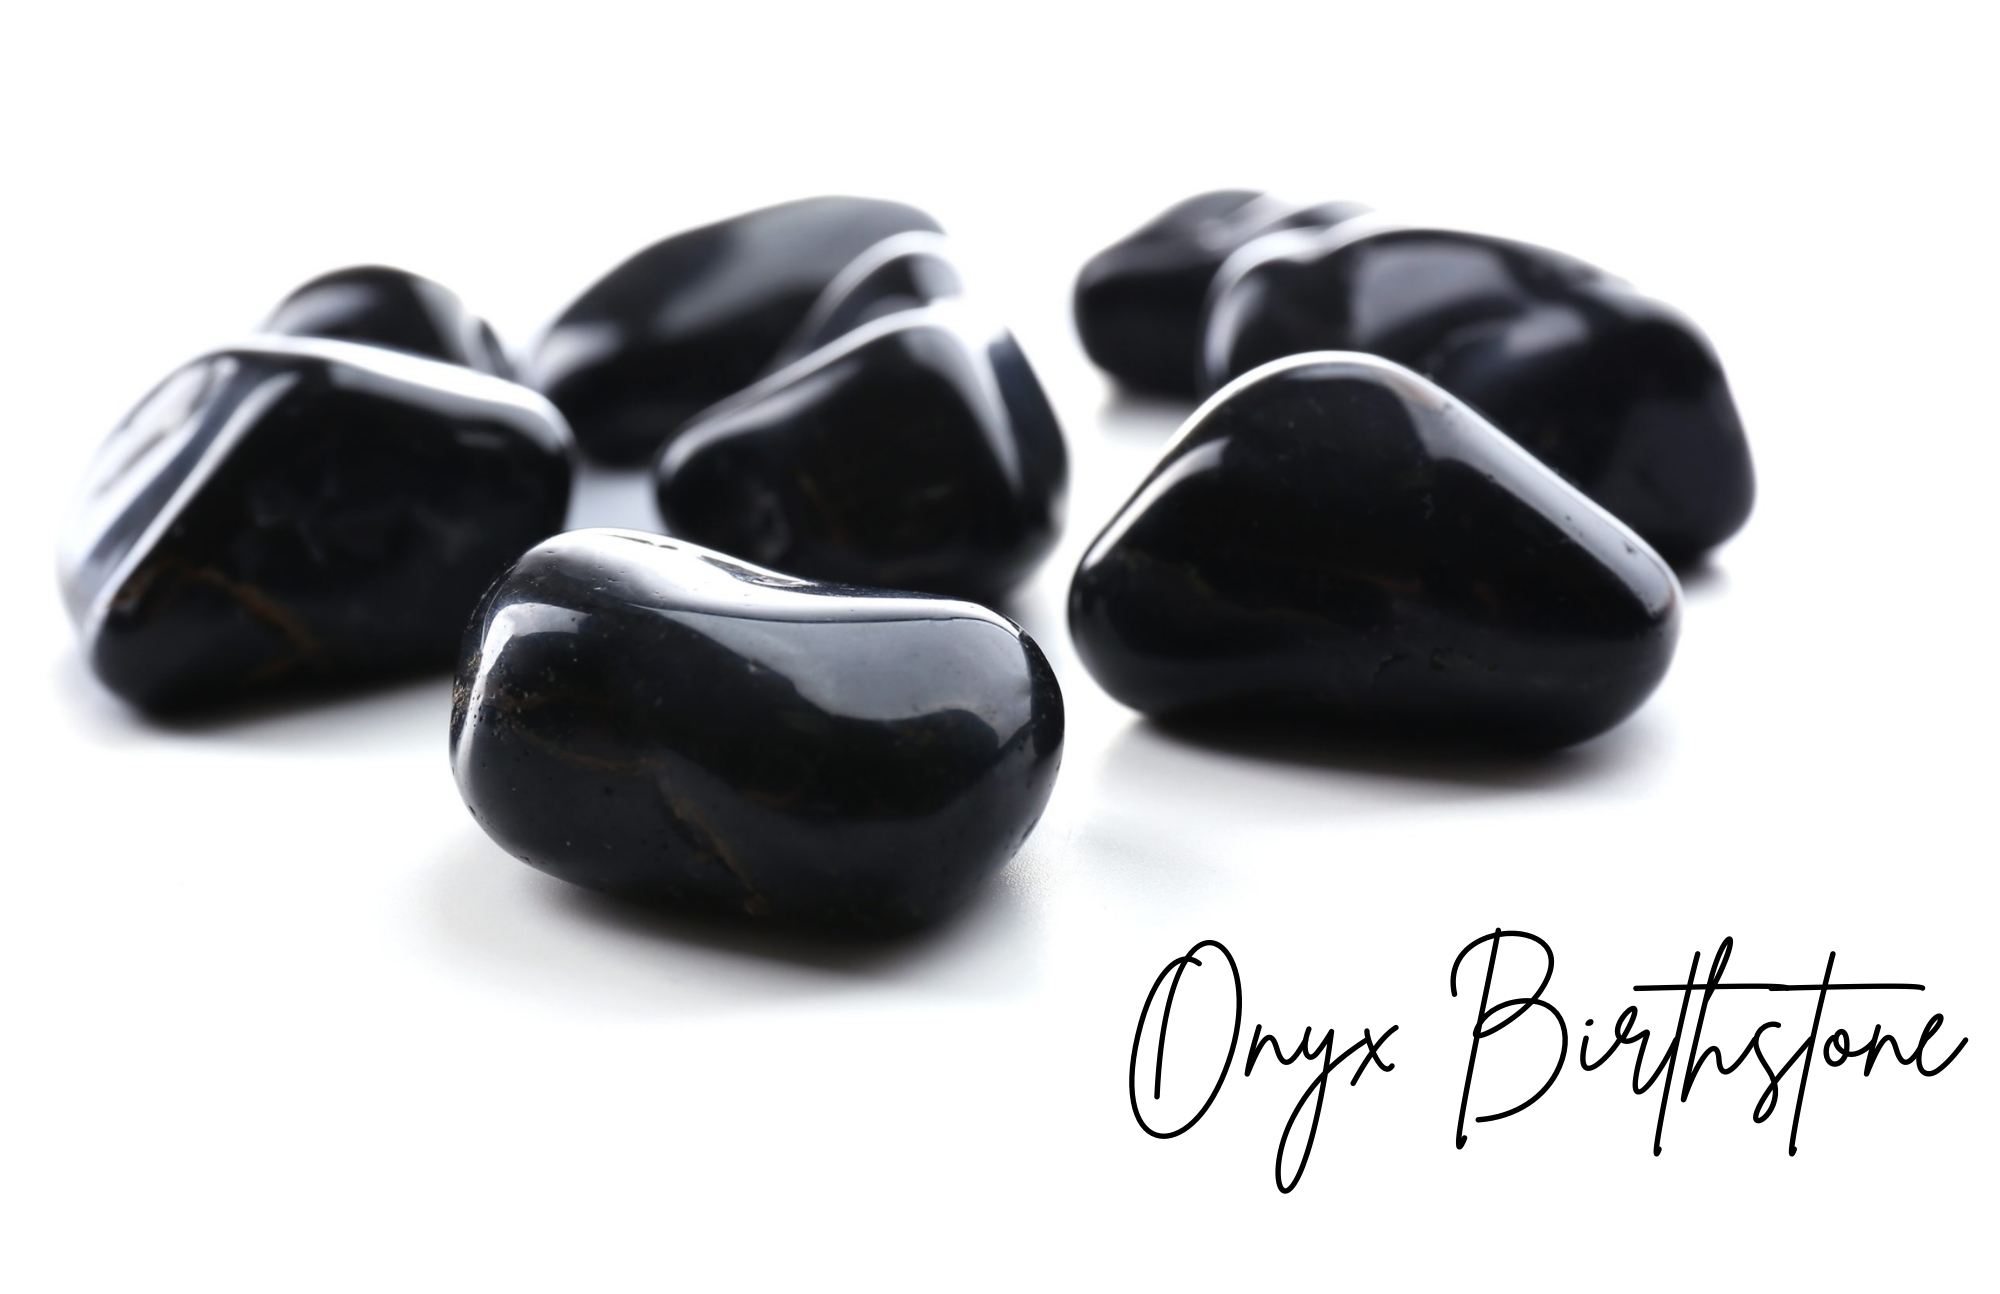 Black Onyx stones with the word onyx birthstone